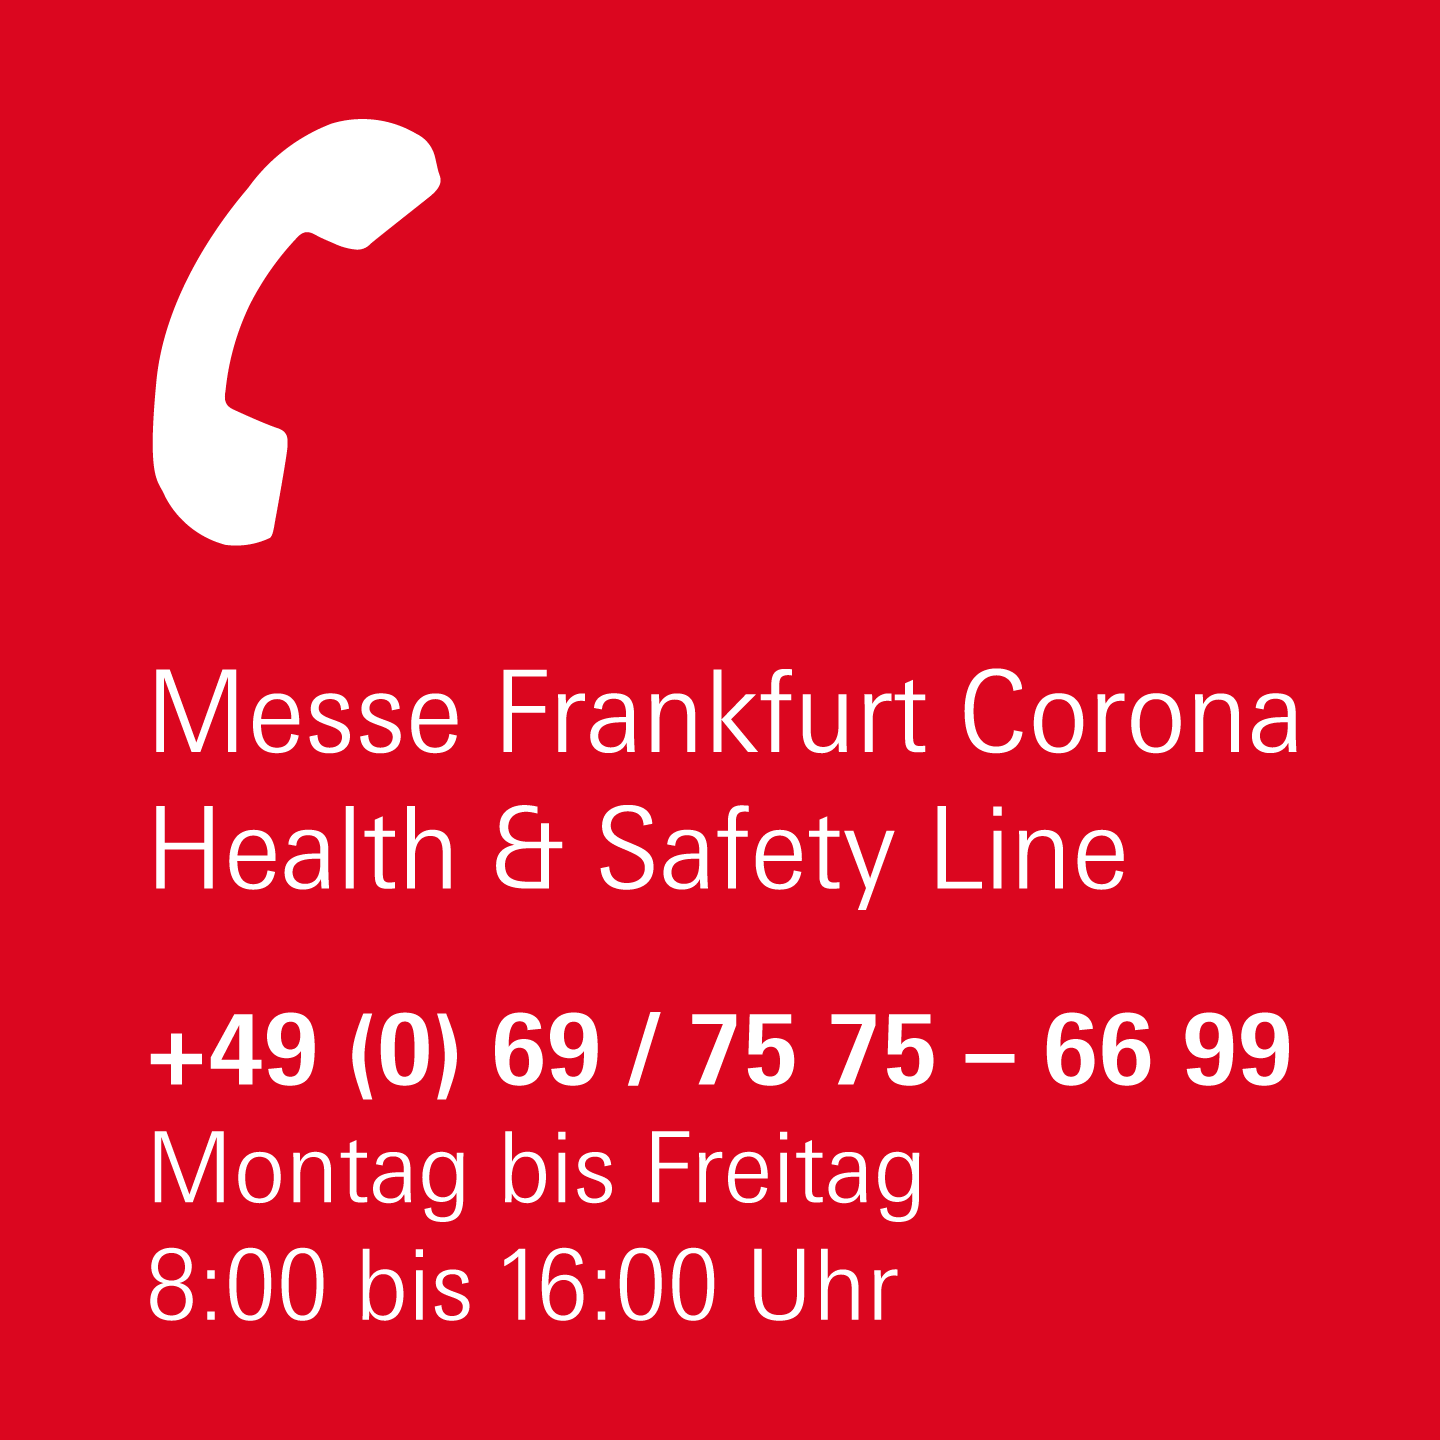 Messe Frankfurt Corona Health & Safety Line